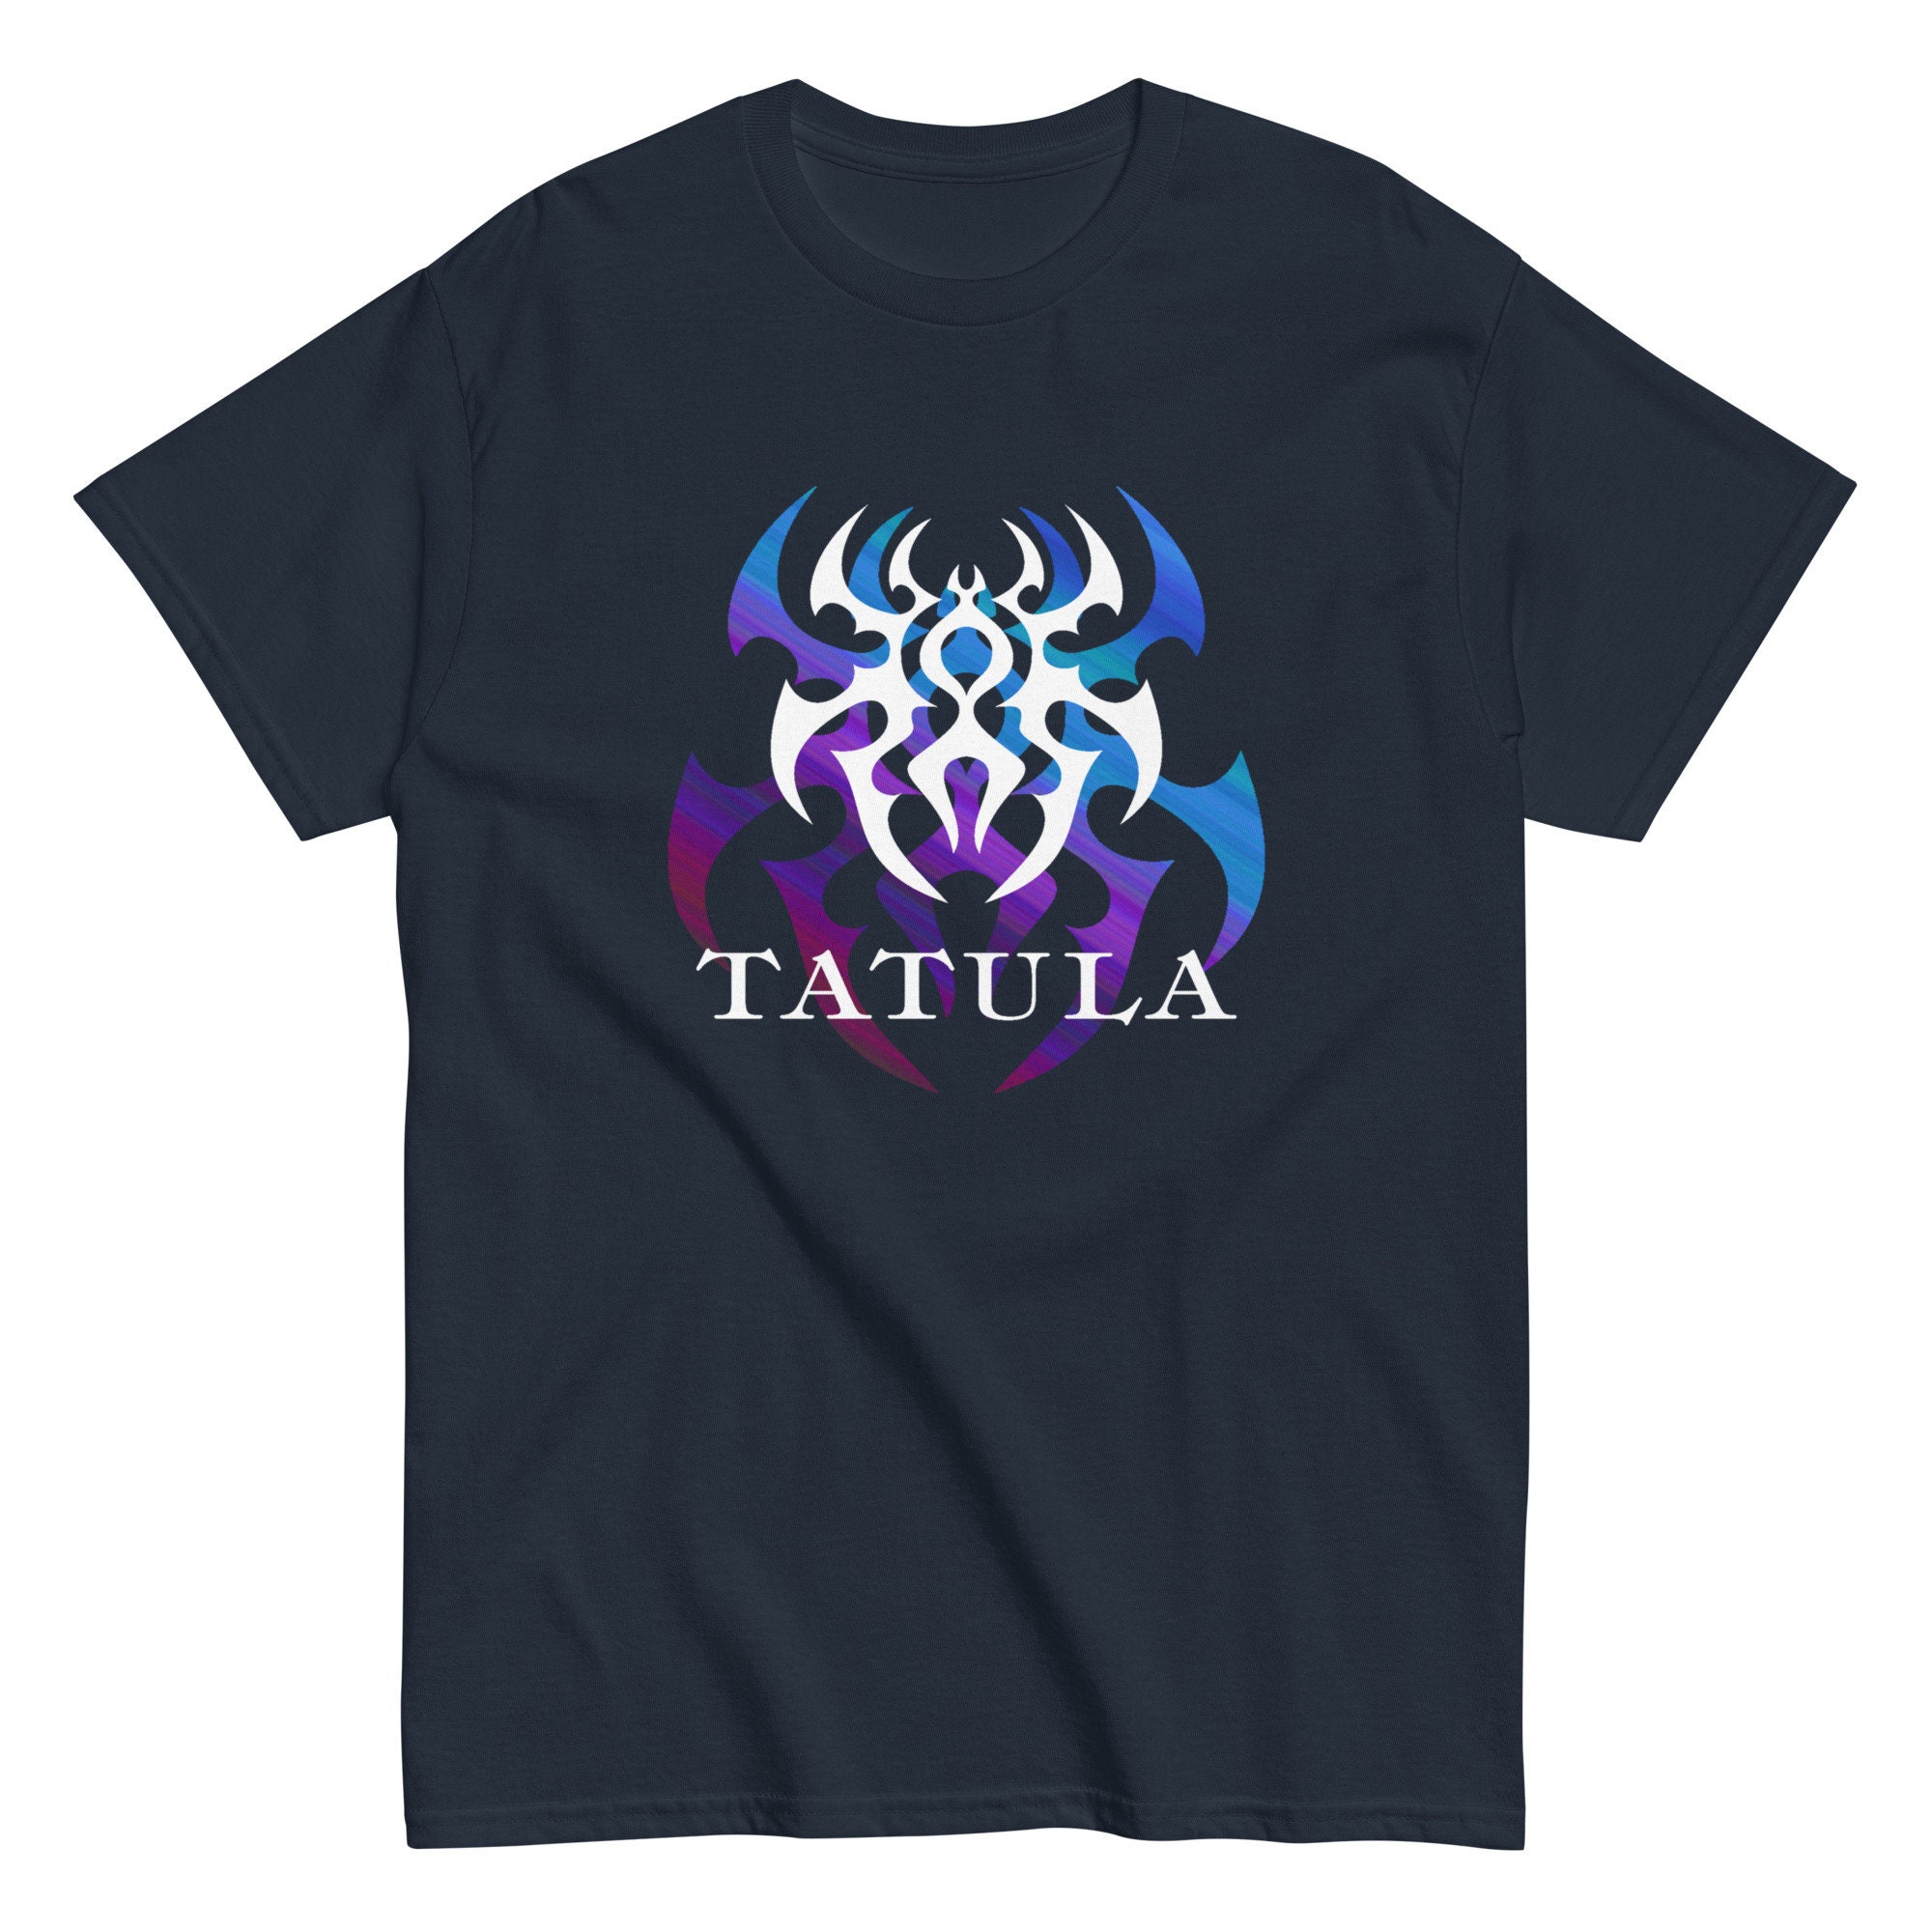 Daiwa Tatula Logo T Shirt, Fishing Tee, Angler Apparel, Outdoor Shirt, Fisherman Gift, unisex Classic Tee S-5xl